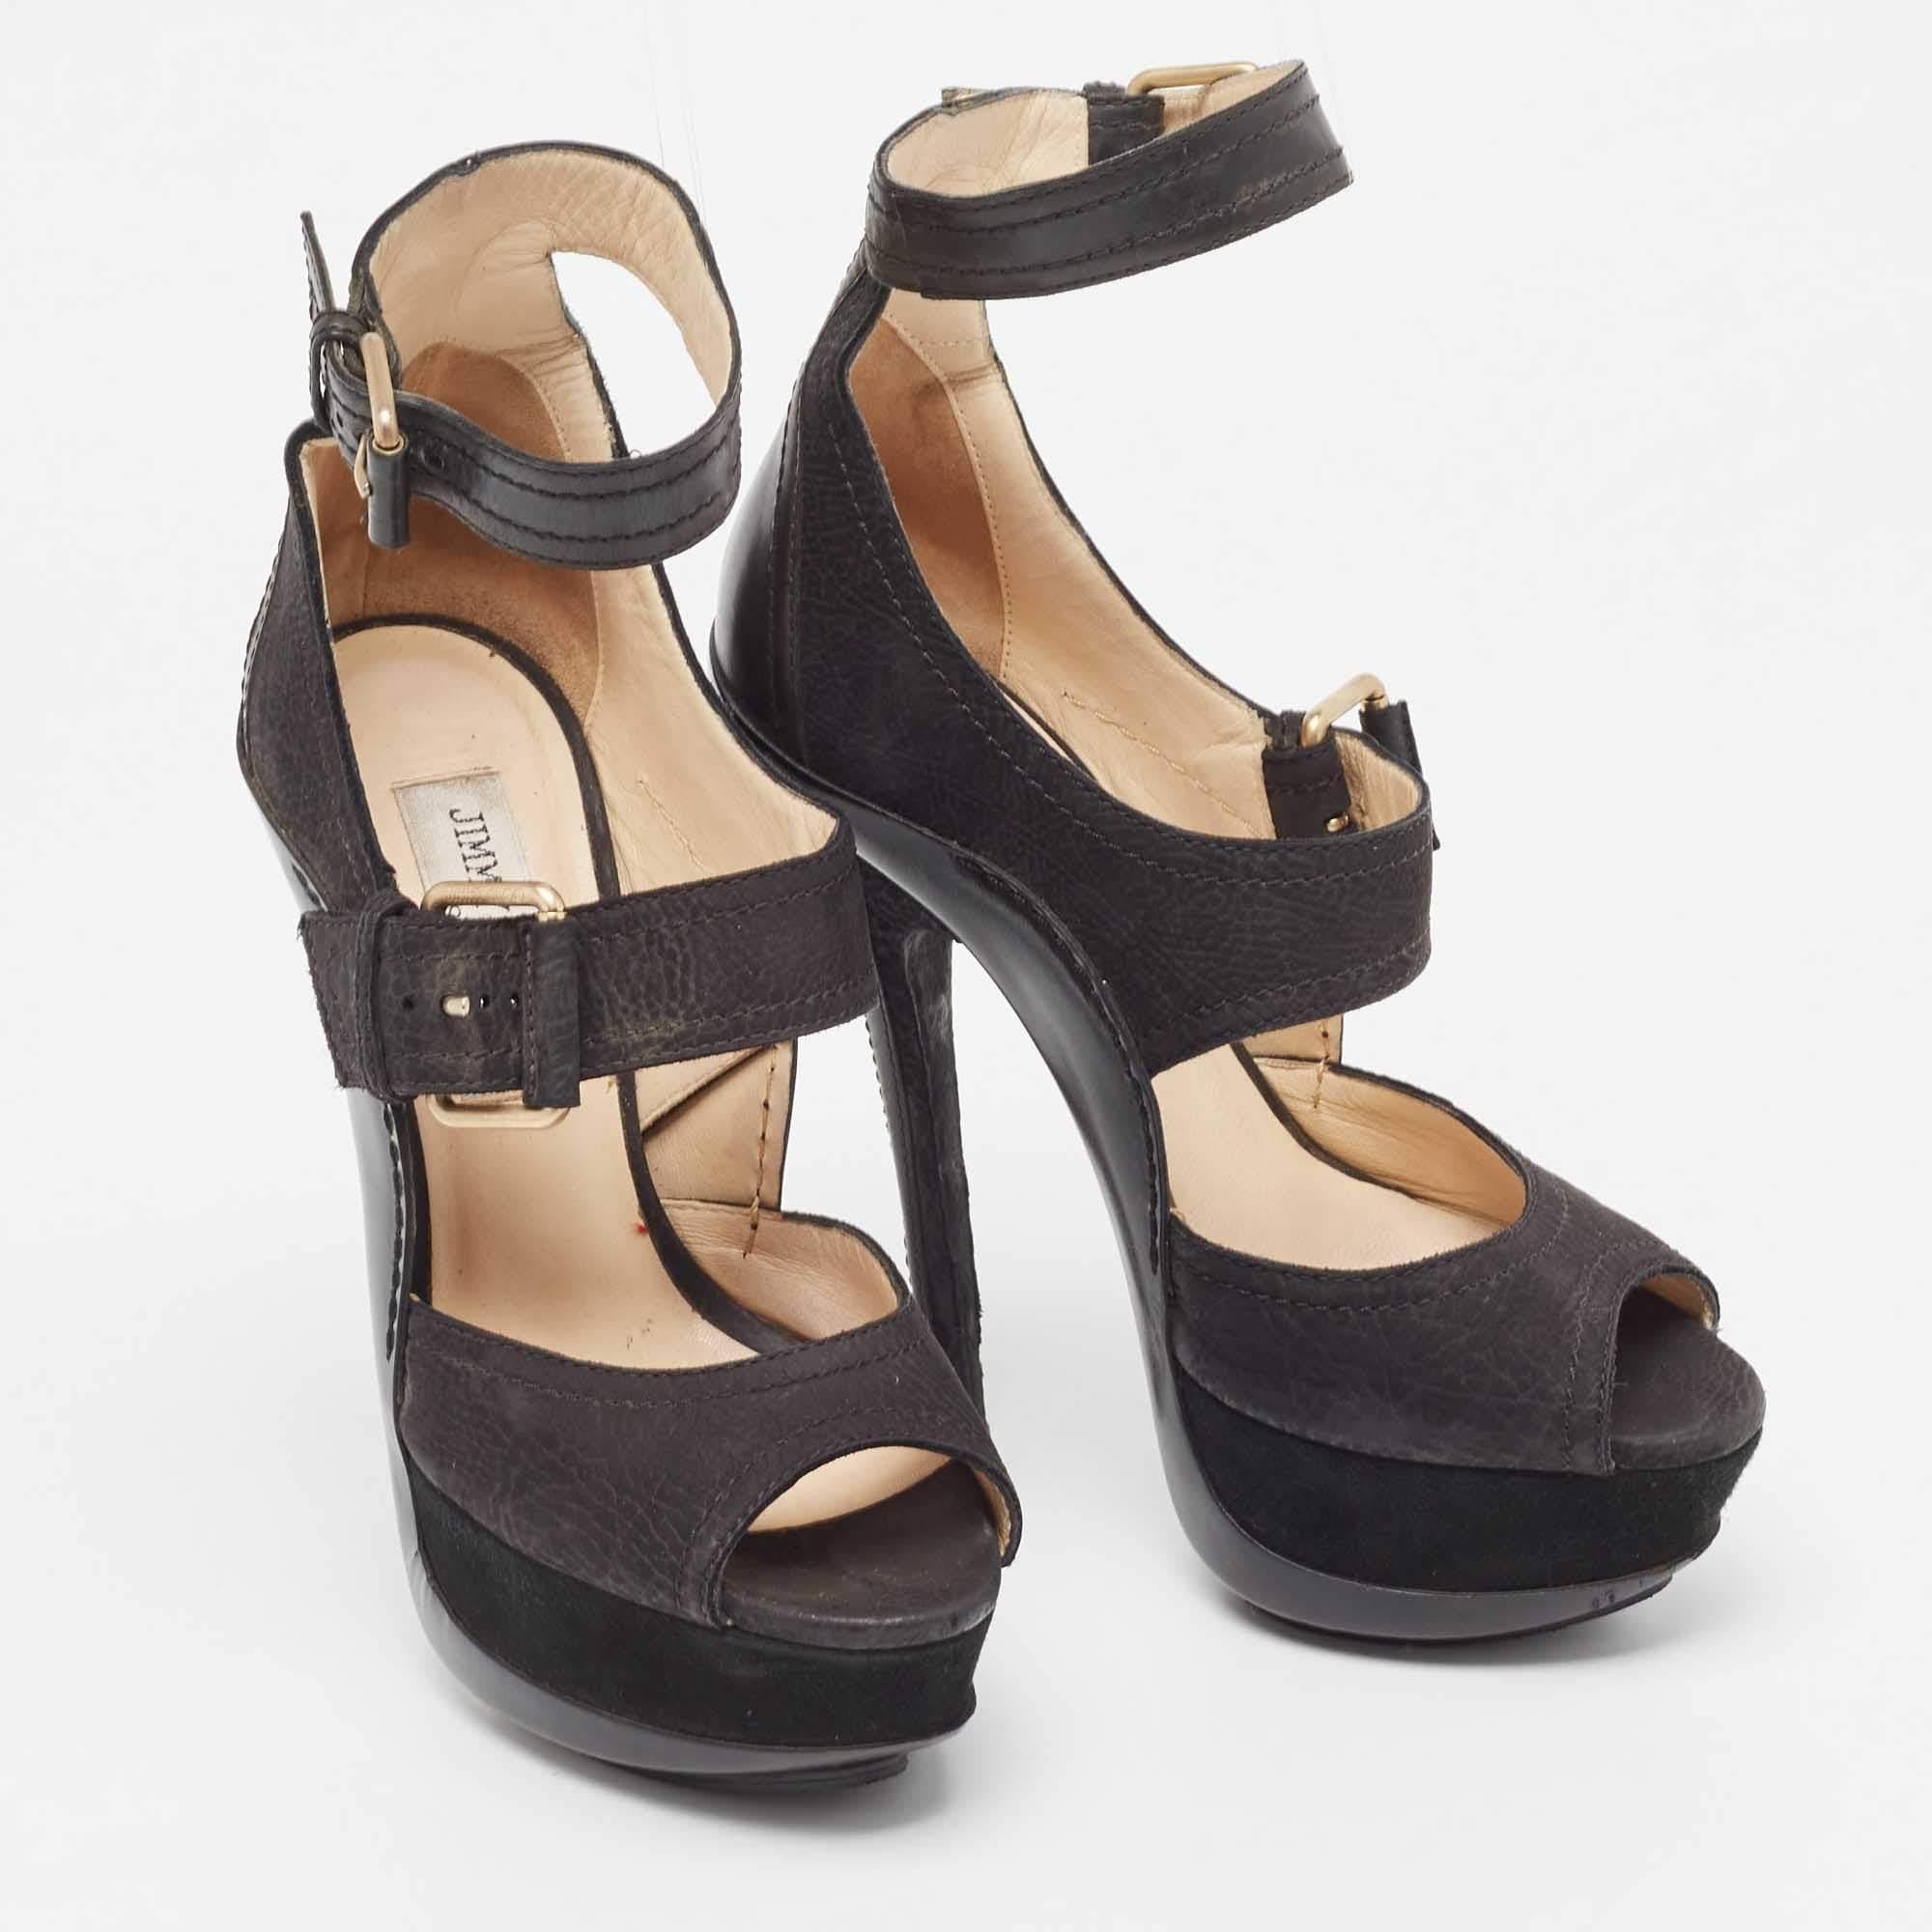 Jimmy Choo Black Nubuck Leather Ankle Strap Sandals Size 36.5 For Sale 1